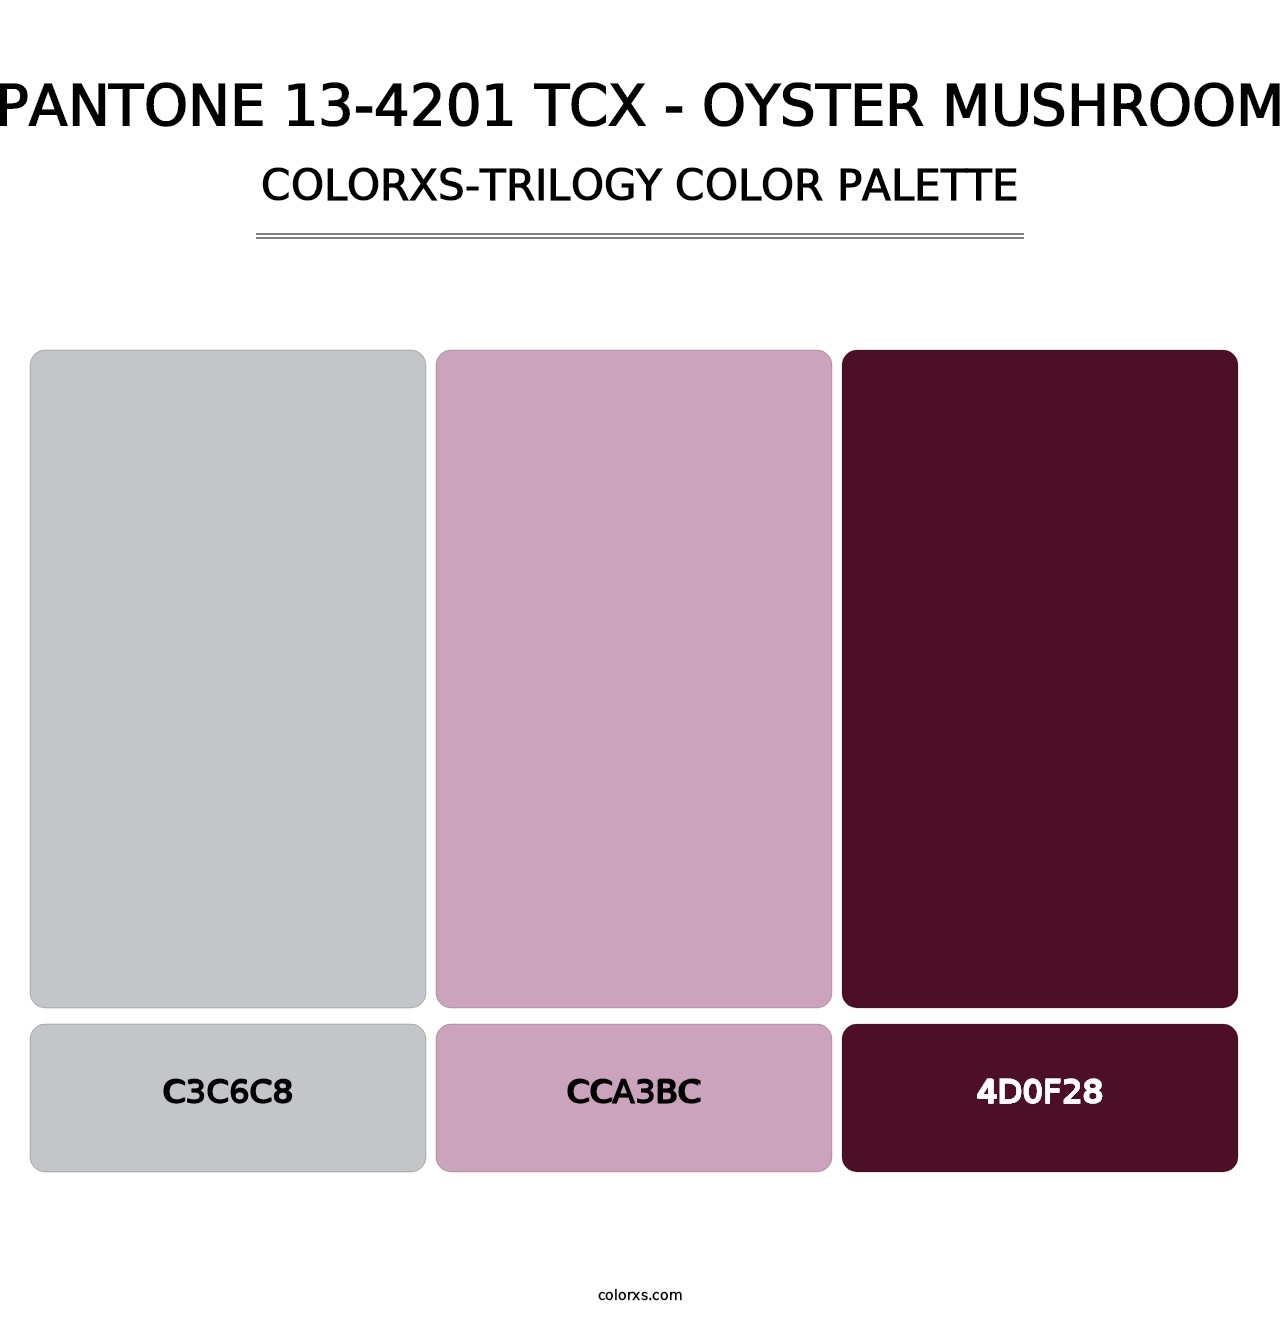 PANTONE 13-4201 TCX - Oyster Mushroom - Colorxs Trilogy Palette